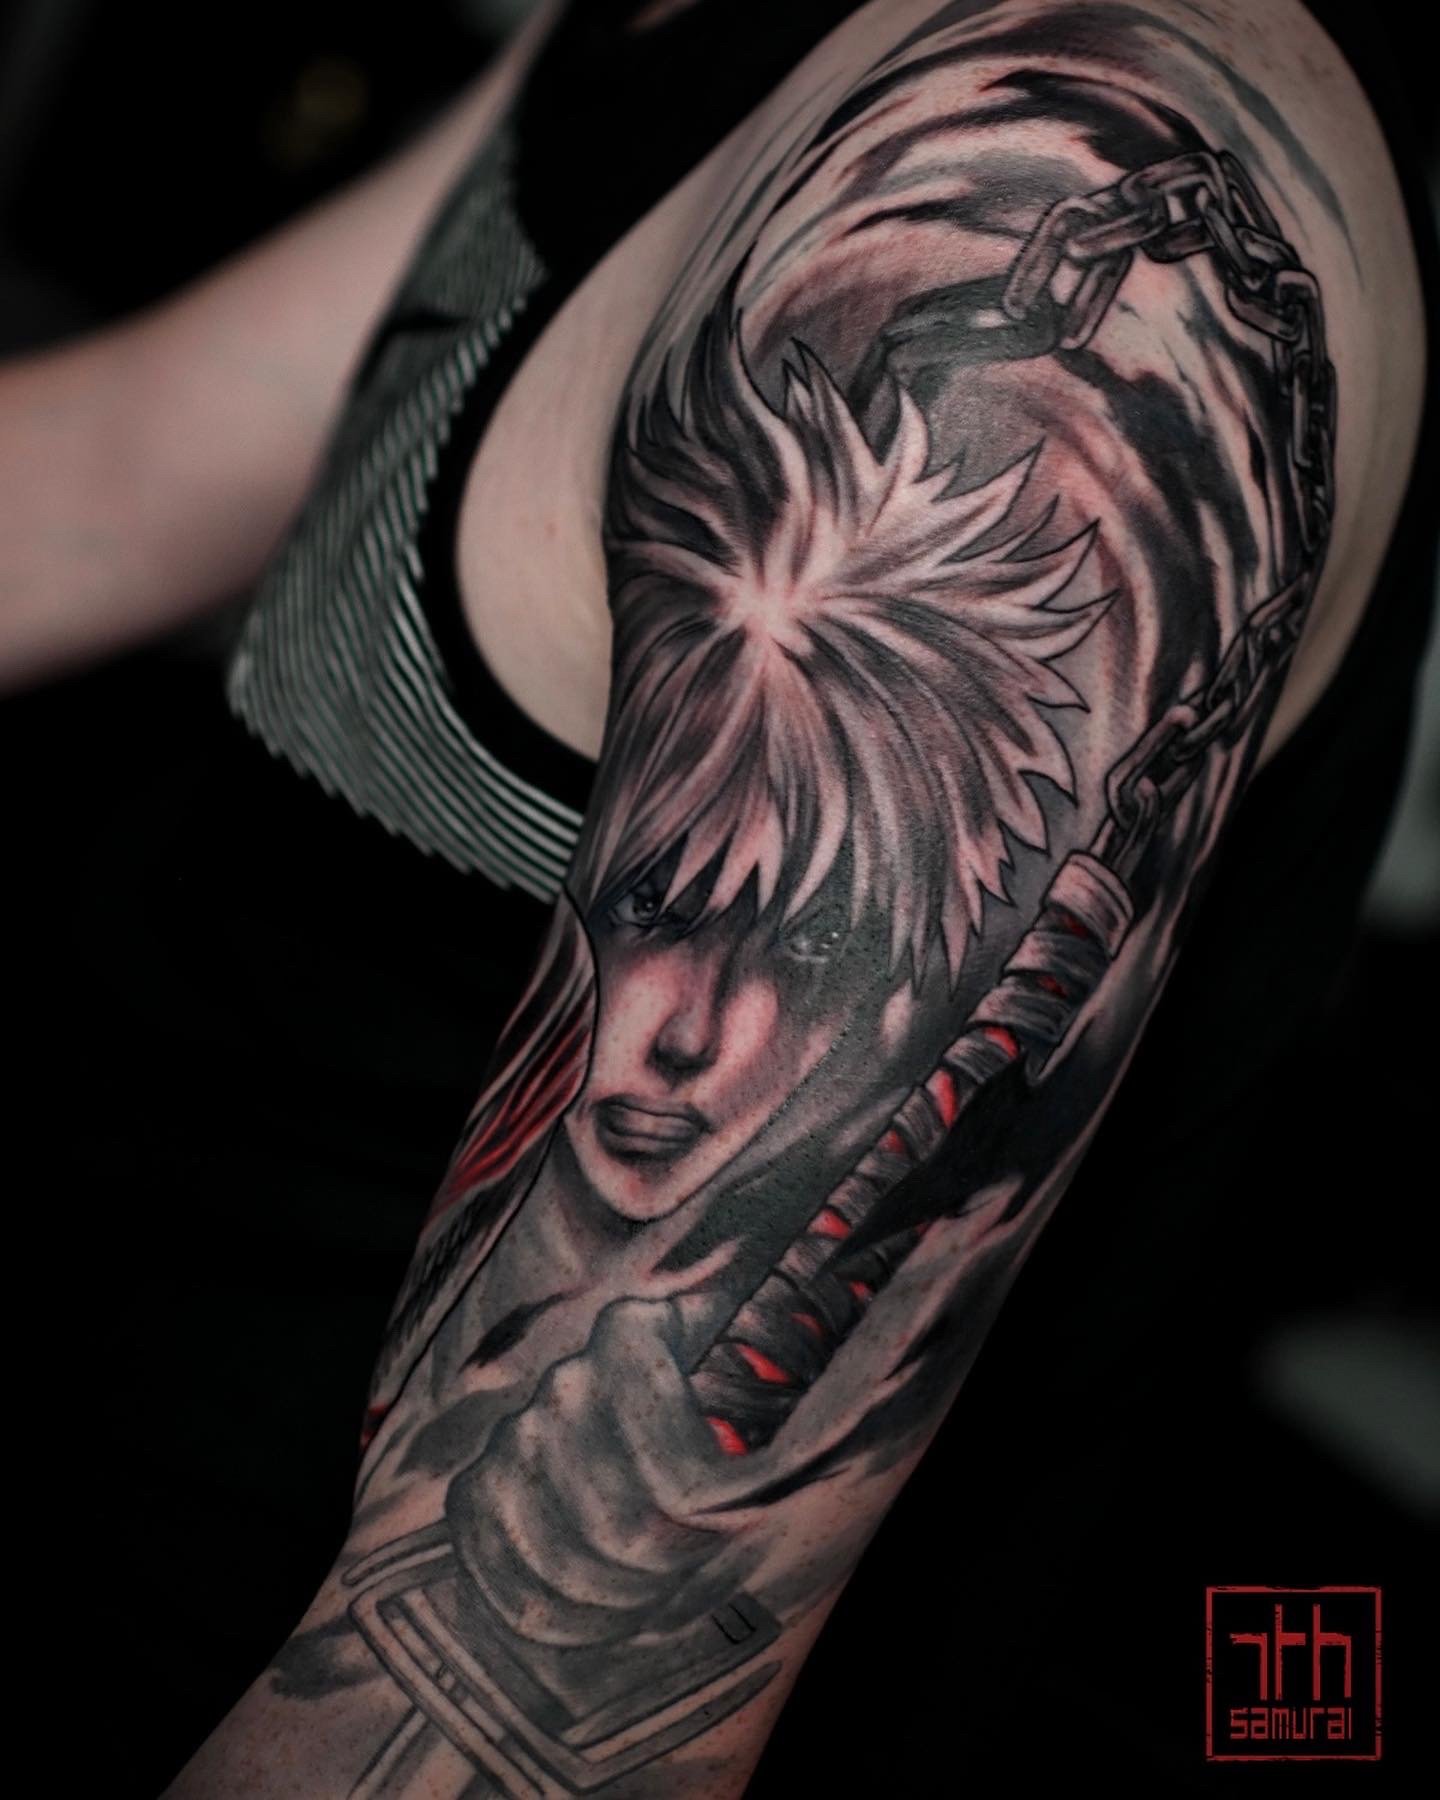  Ichigo Kurosaki   Men's Bleach anime manga tattoo with red highlights   asian artist: Kai 7th Samurai. YEG Edmonton, Alberta, Canada 2023 best 2024  